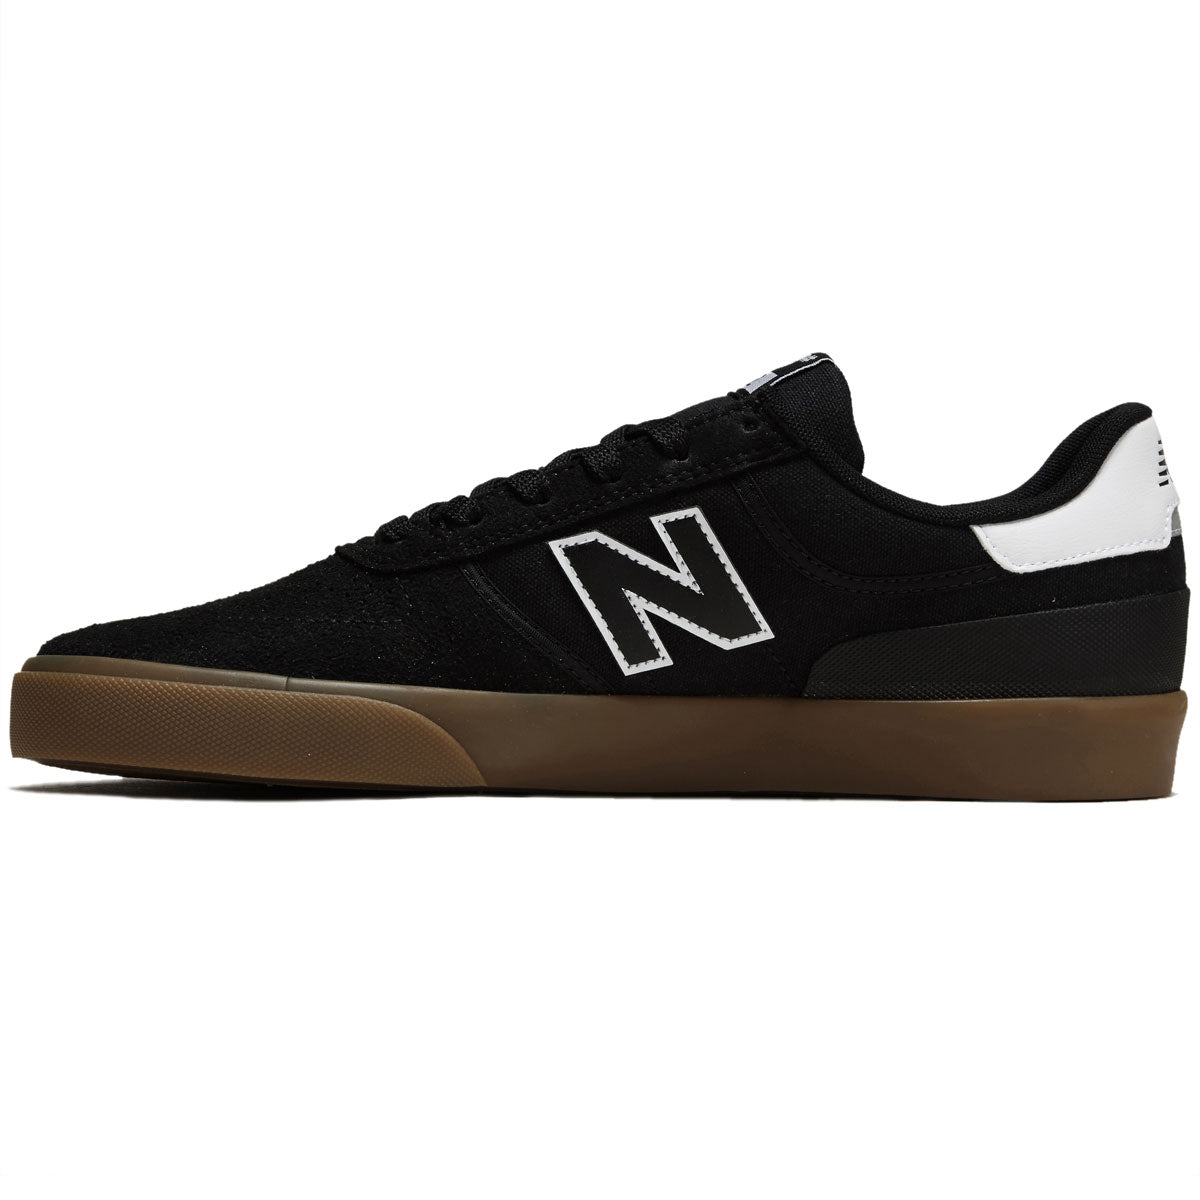 New Balance 272 Shoes - Black/Gum Vegan image 2